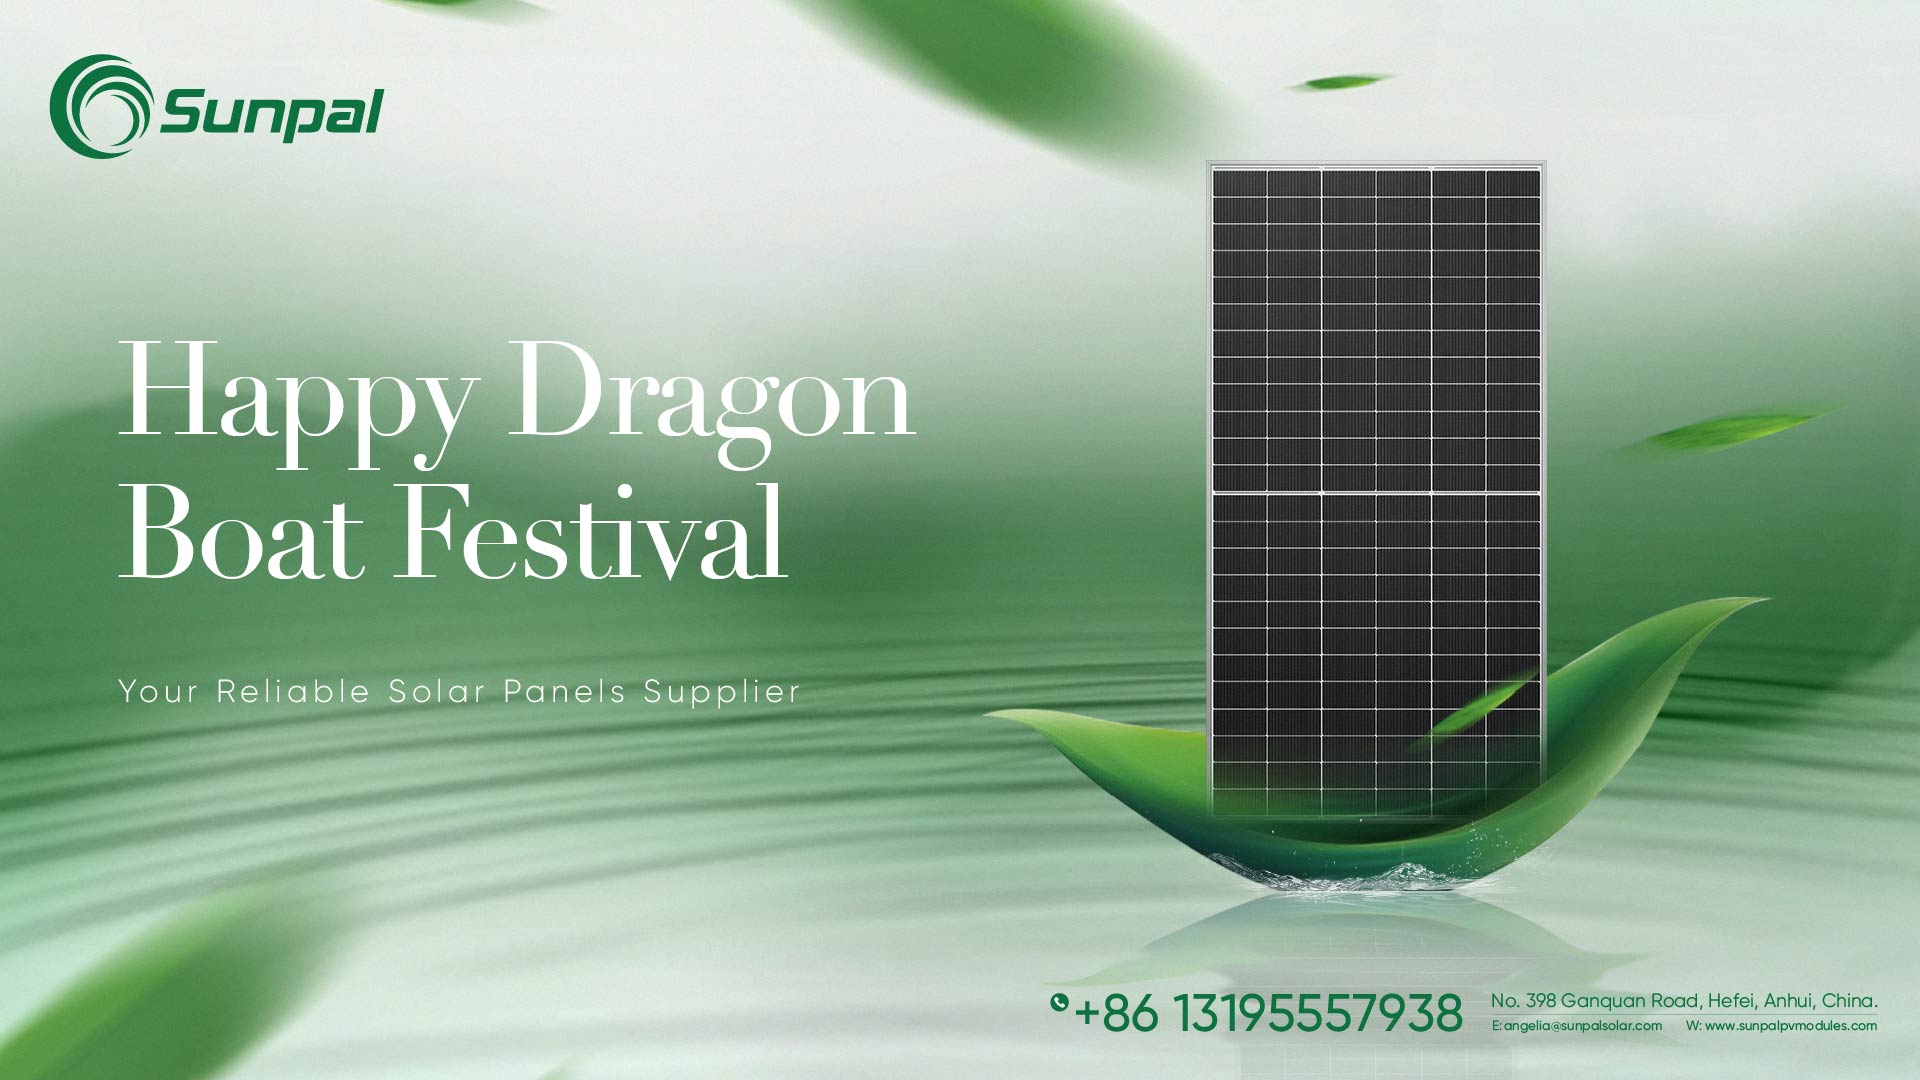 Celebrating the Dragon Boat Festival with Sunpal Solar